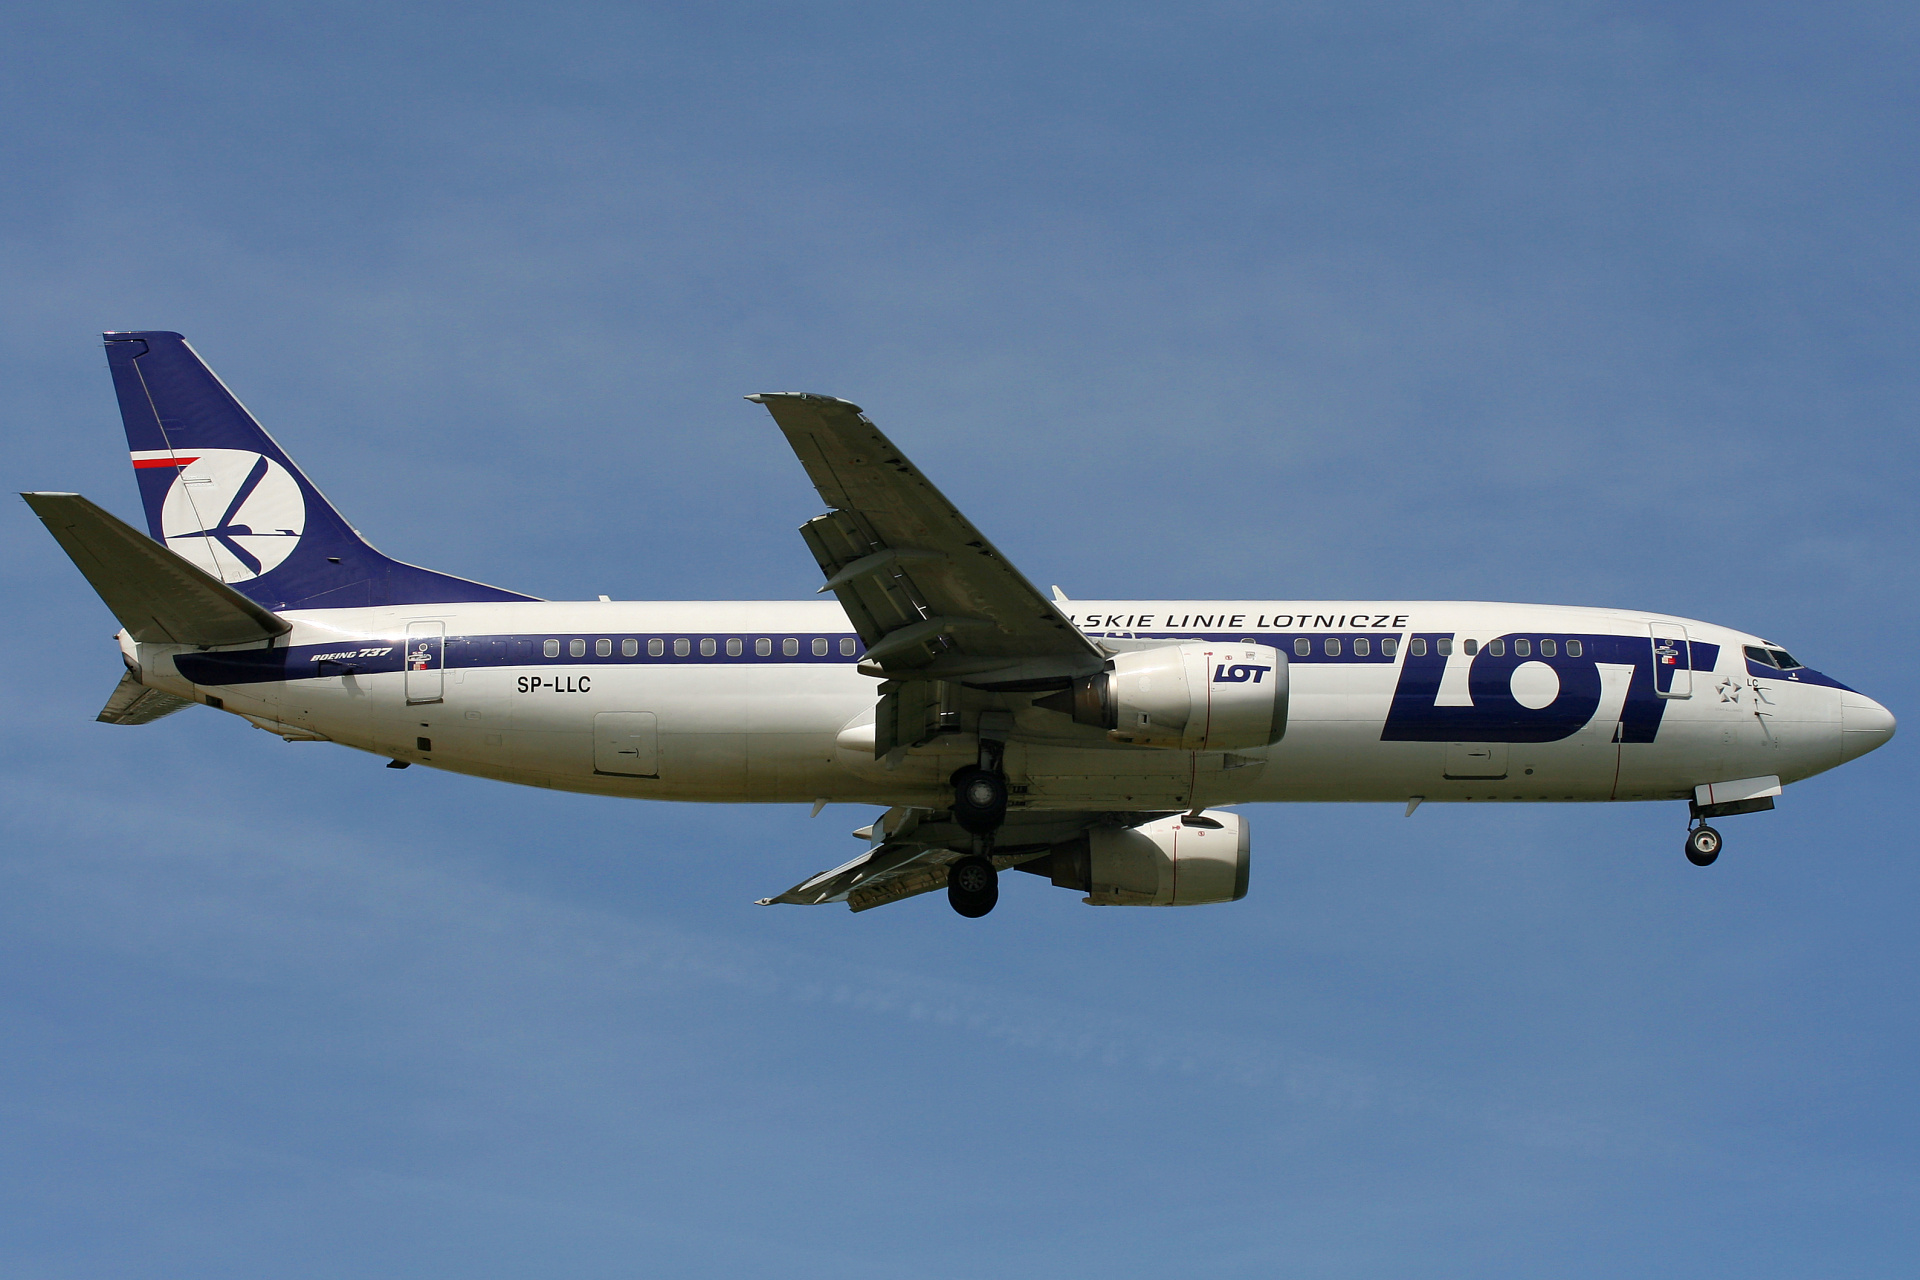 SP-LLC (Aircraft » EPWA Spotting » Boeing 737-400 » LOT Polish Airlines)